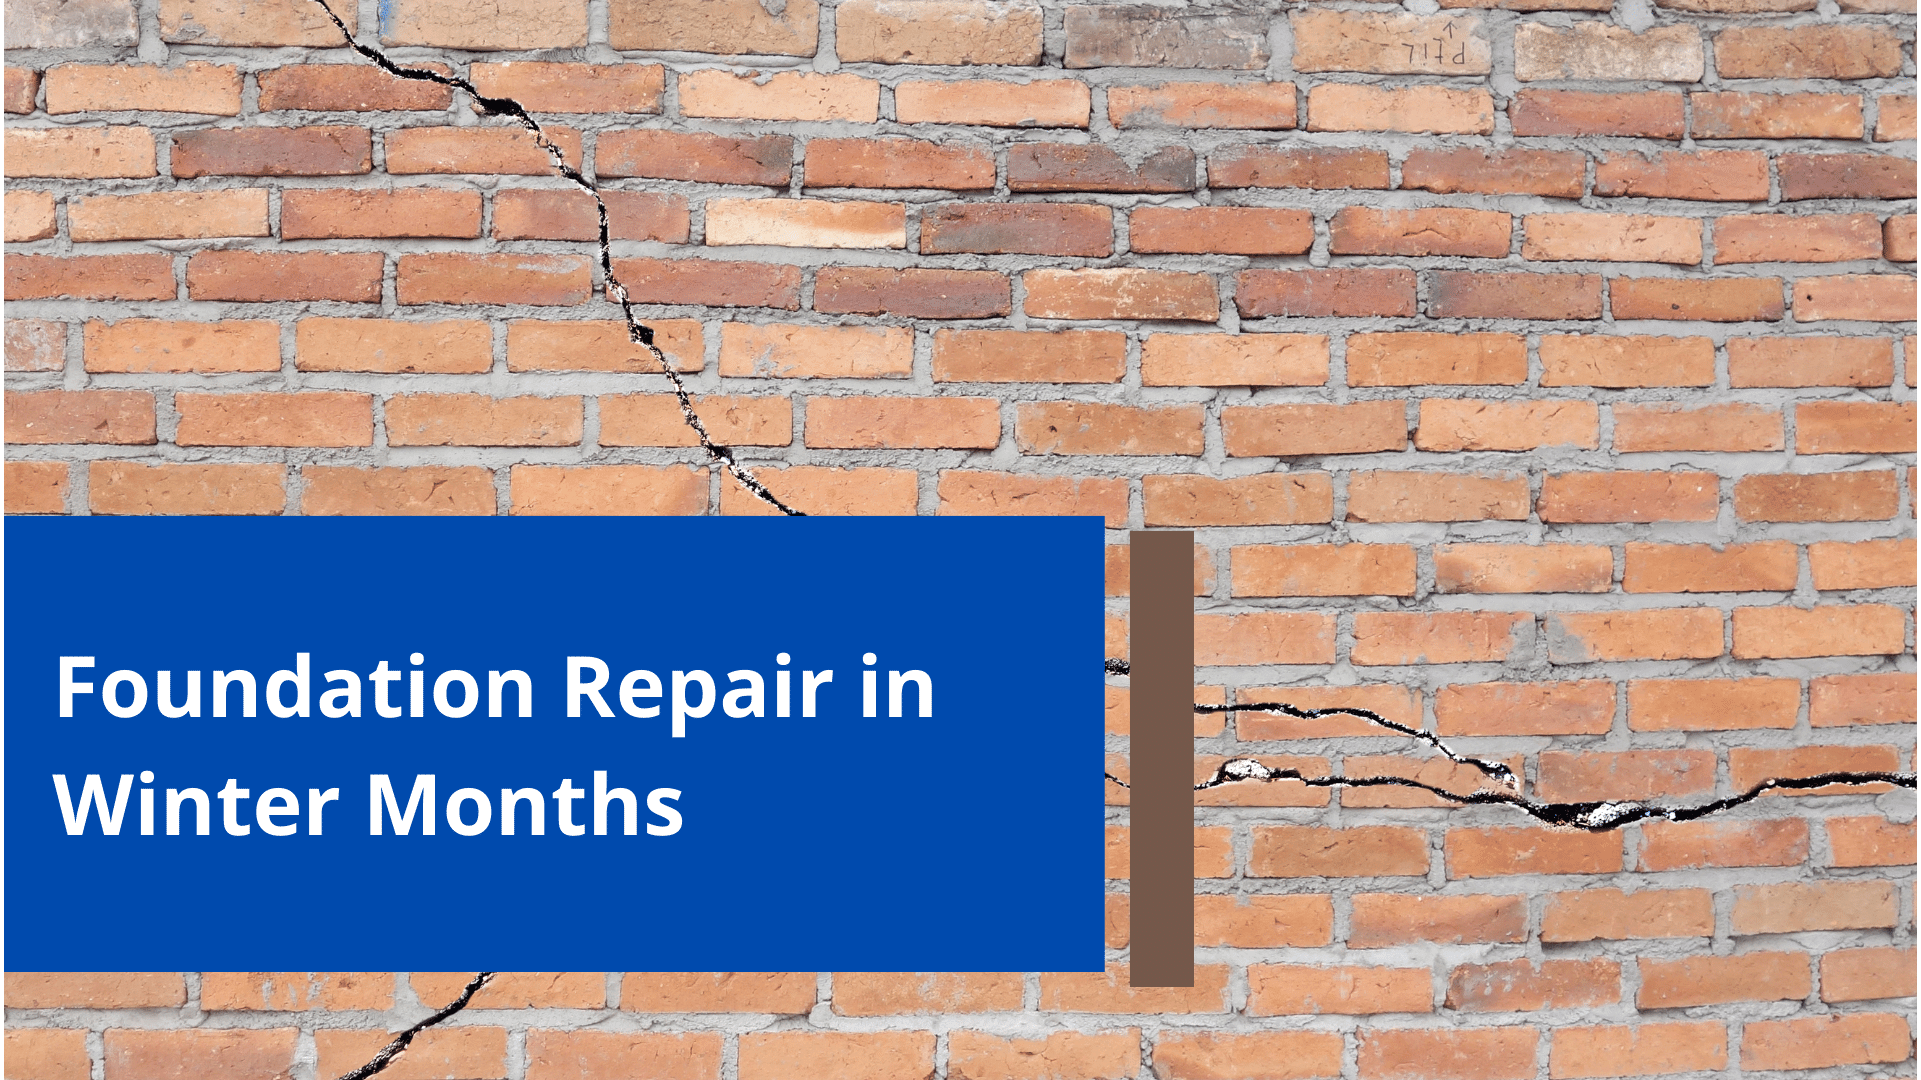 Foundation Repair in Winter Months